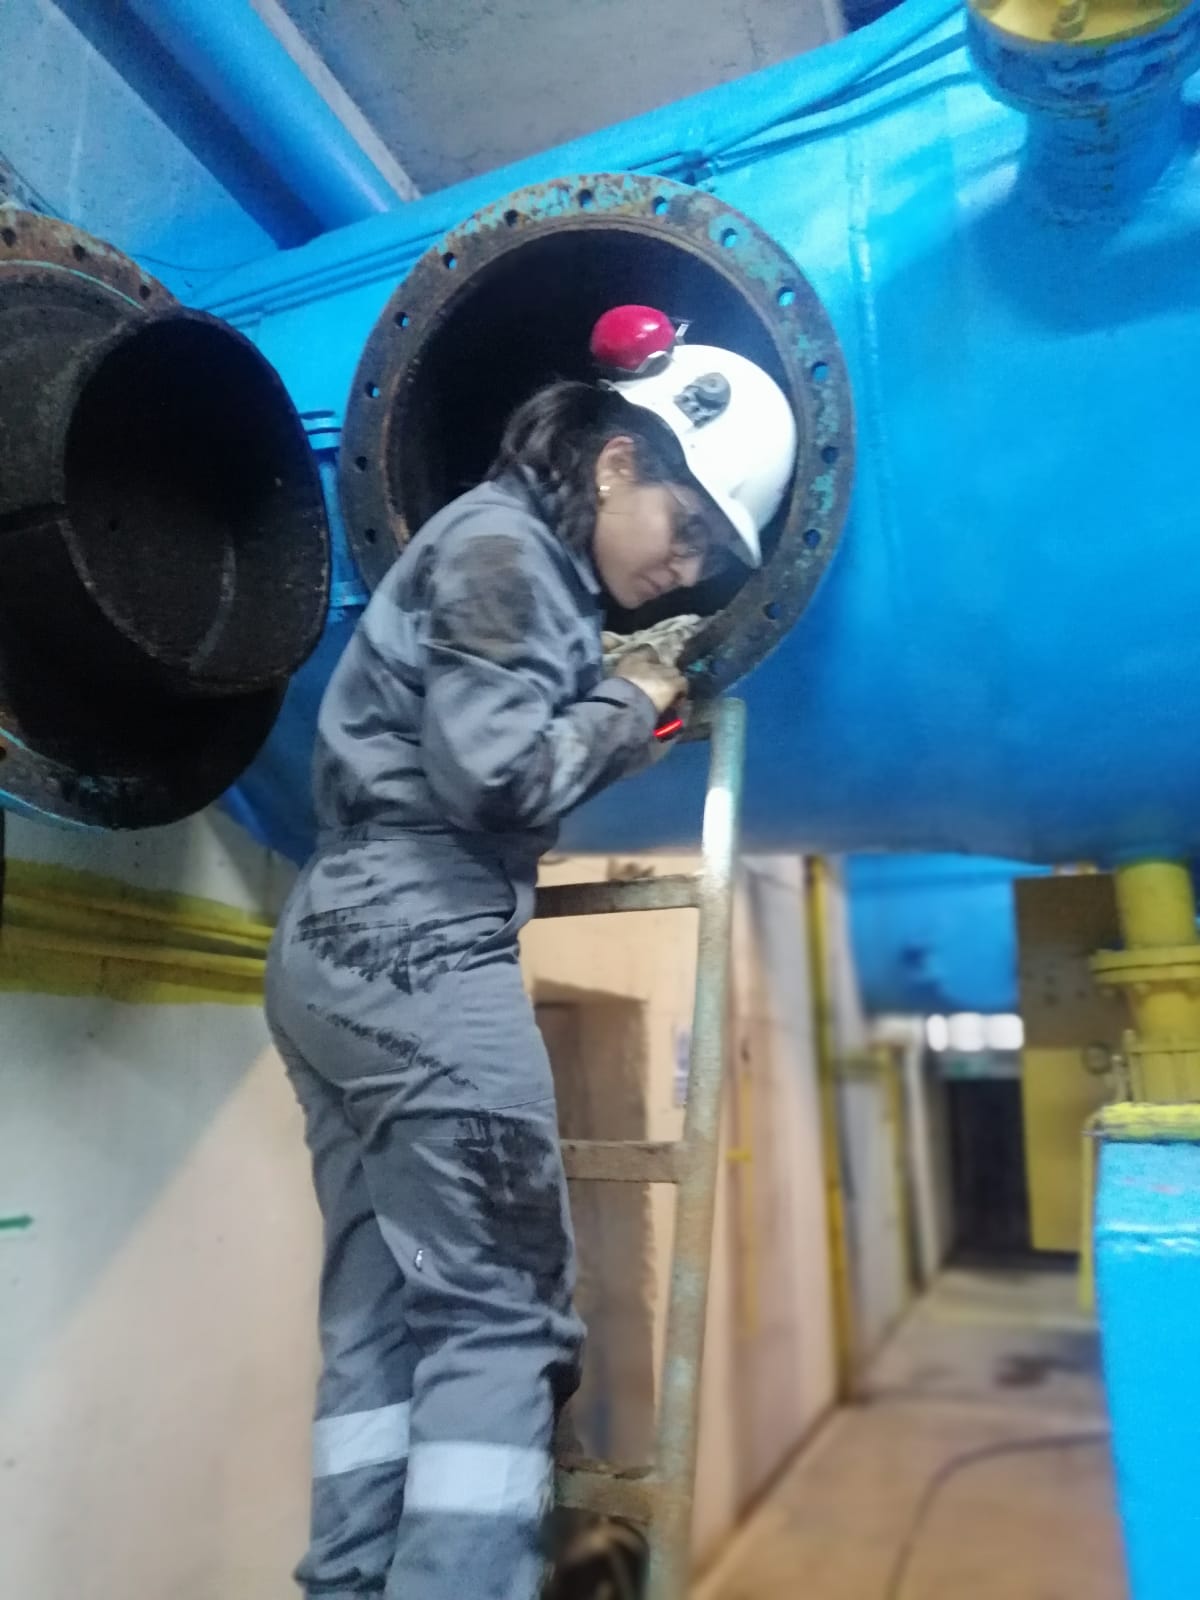 Songul Ogdum renewable energy engineering in overalls inside turbine